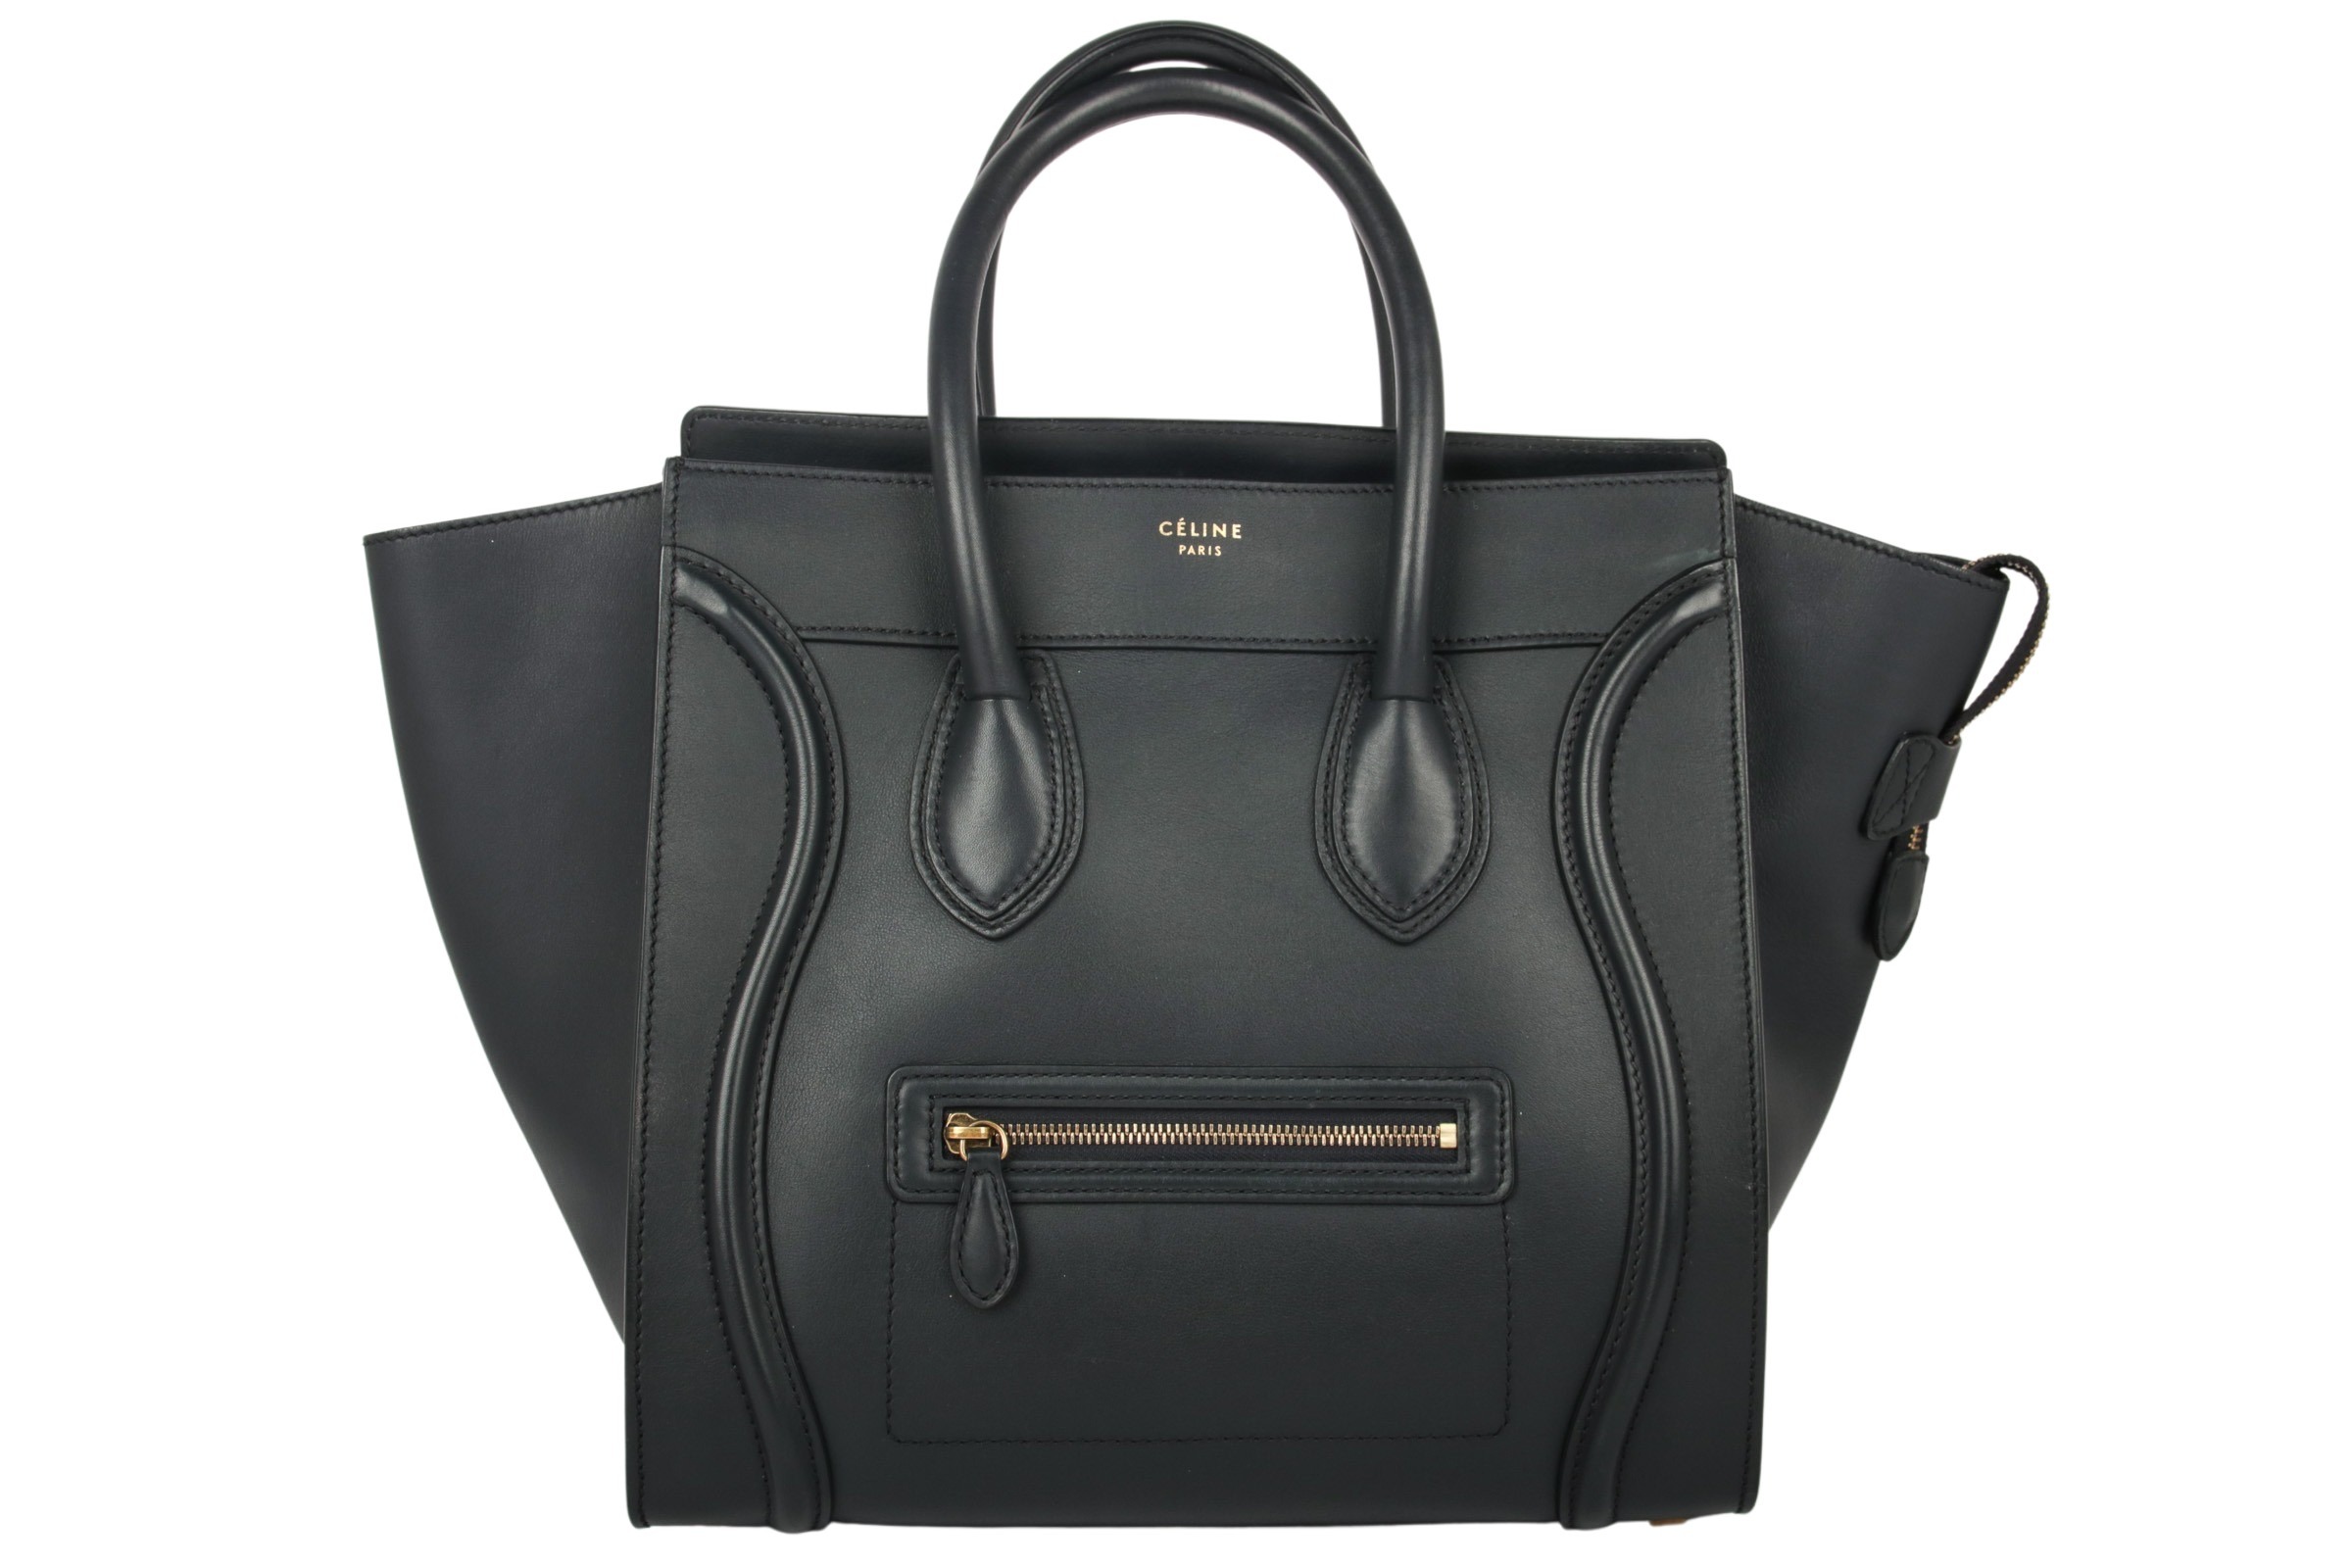 Céline Handbags & Accessories | Luxussachen.com